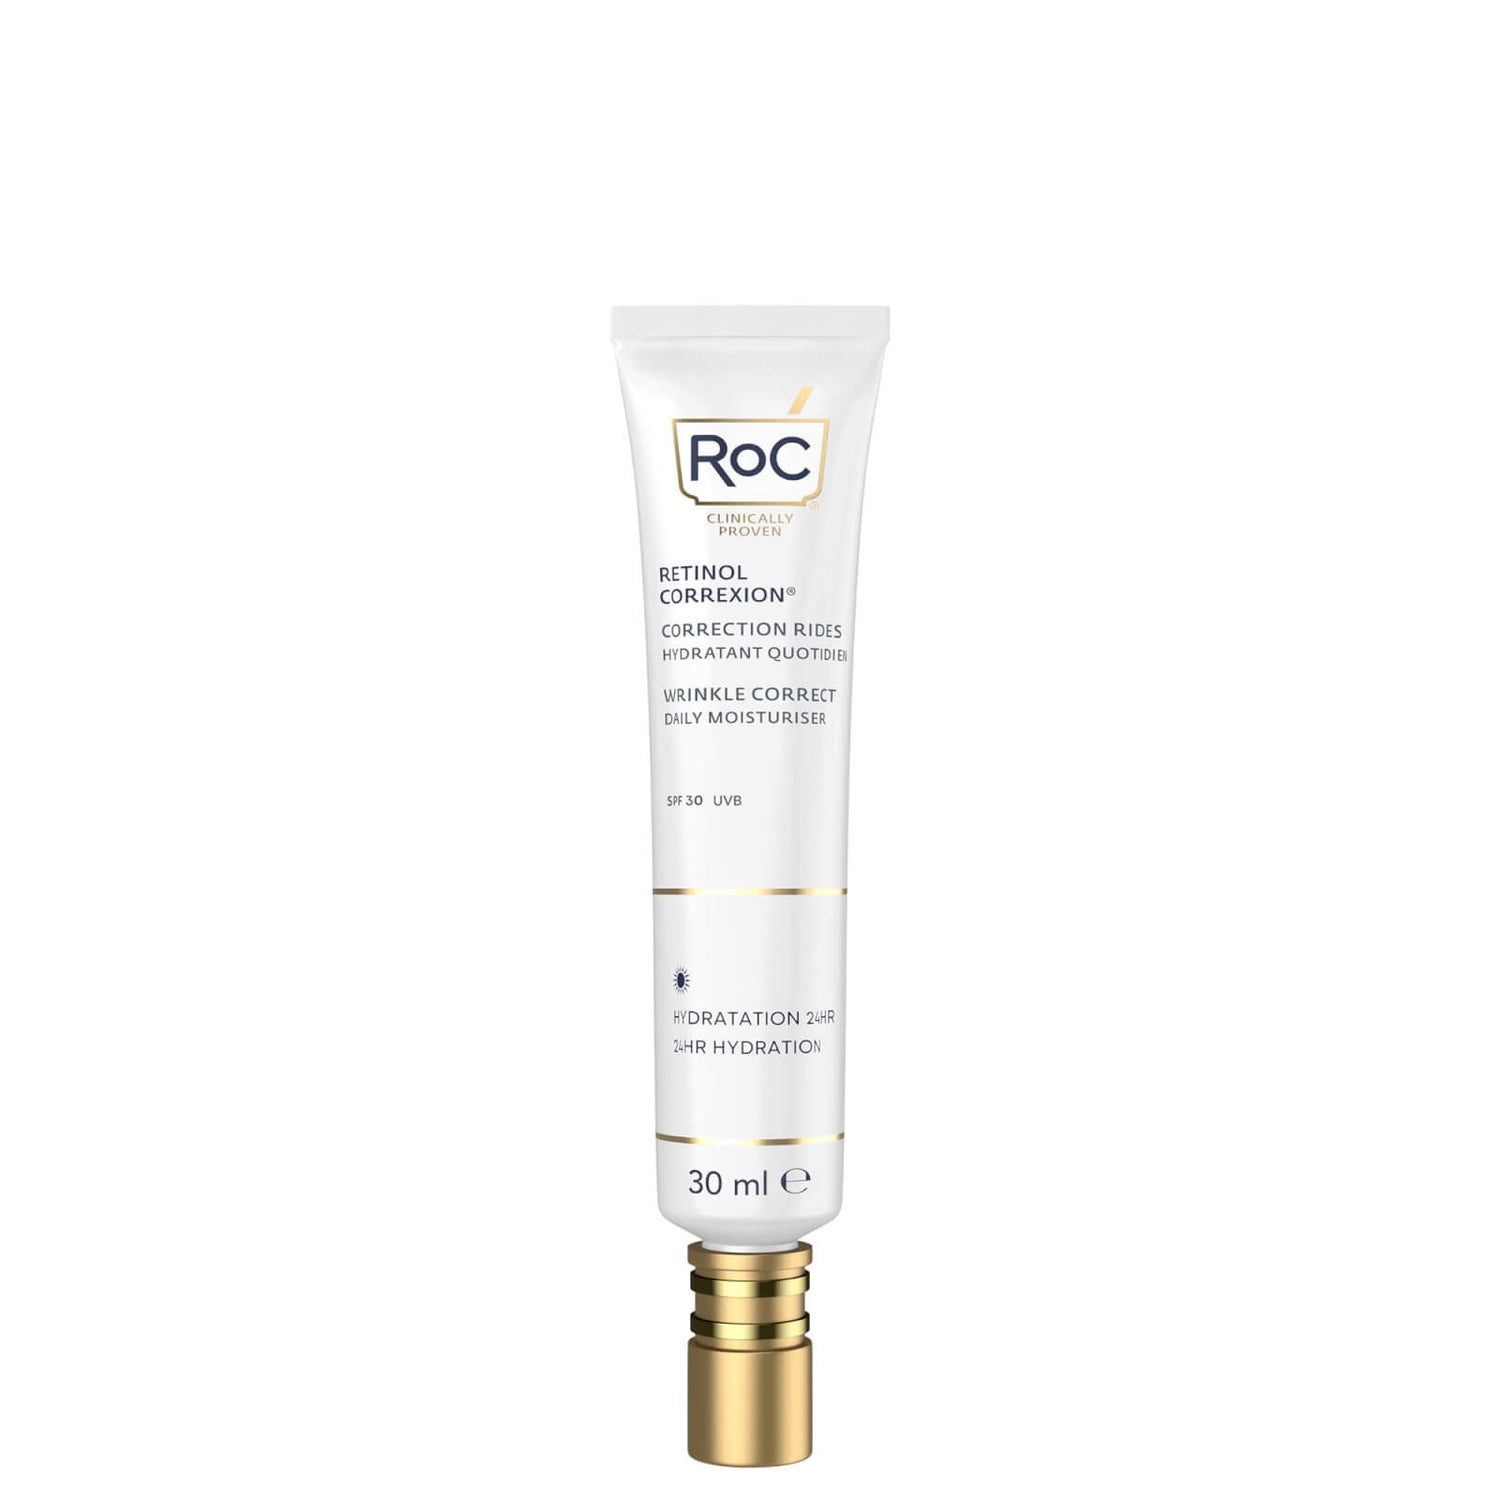 RoC Skincare Retinol Correxion Wrinkle Correct Daily Moisturiser SPF30 30ml